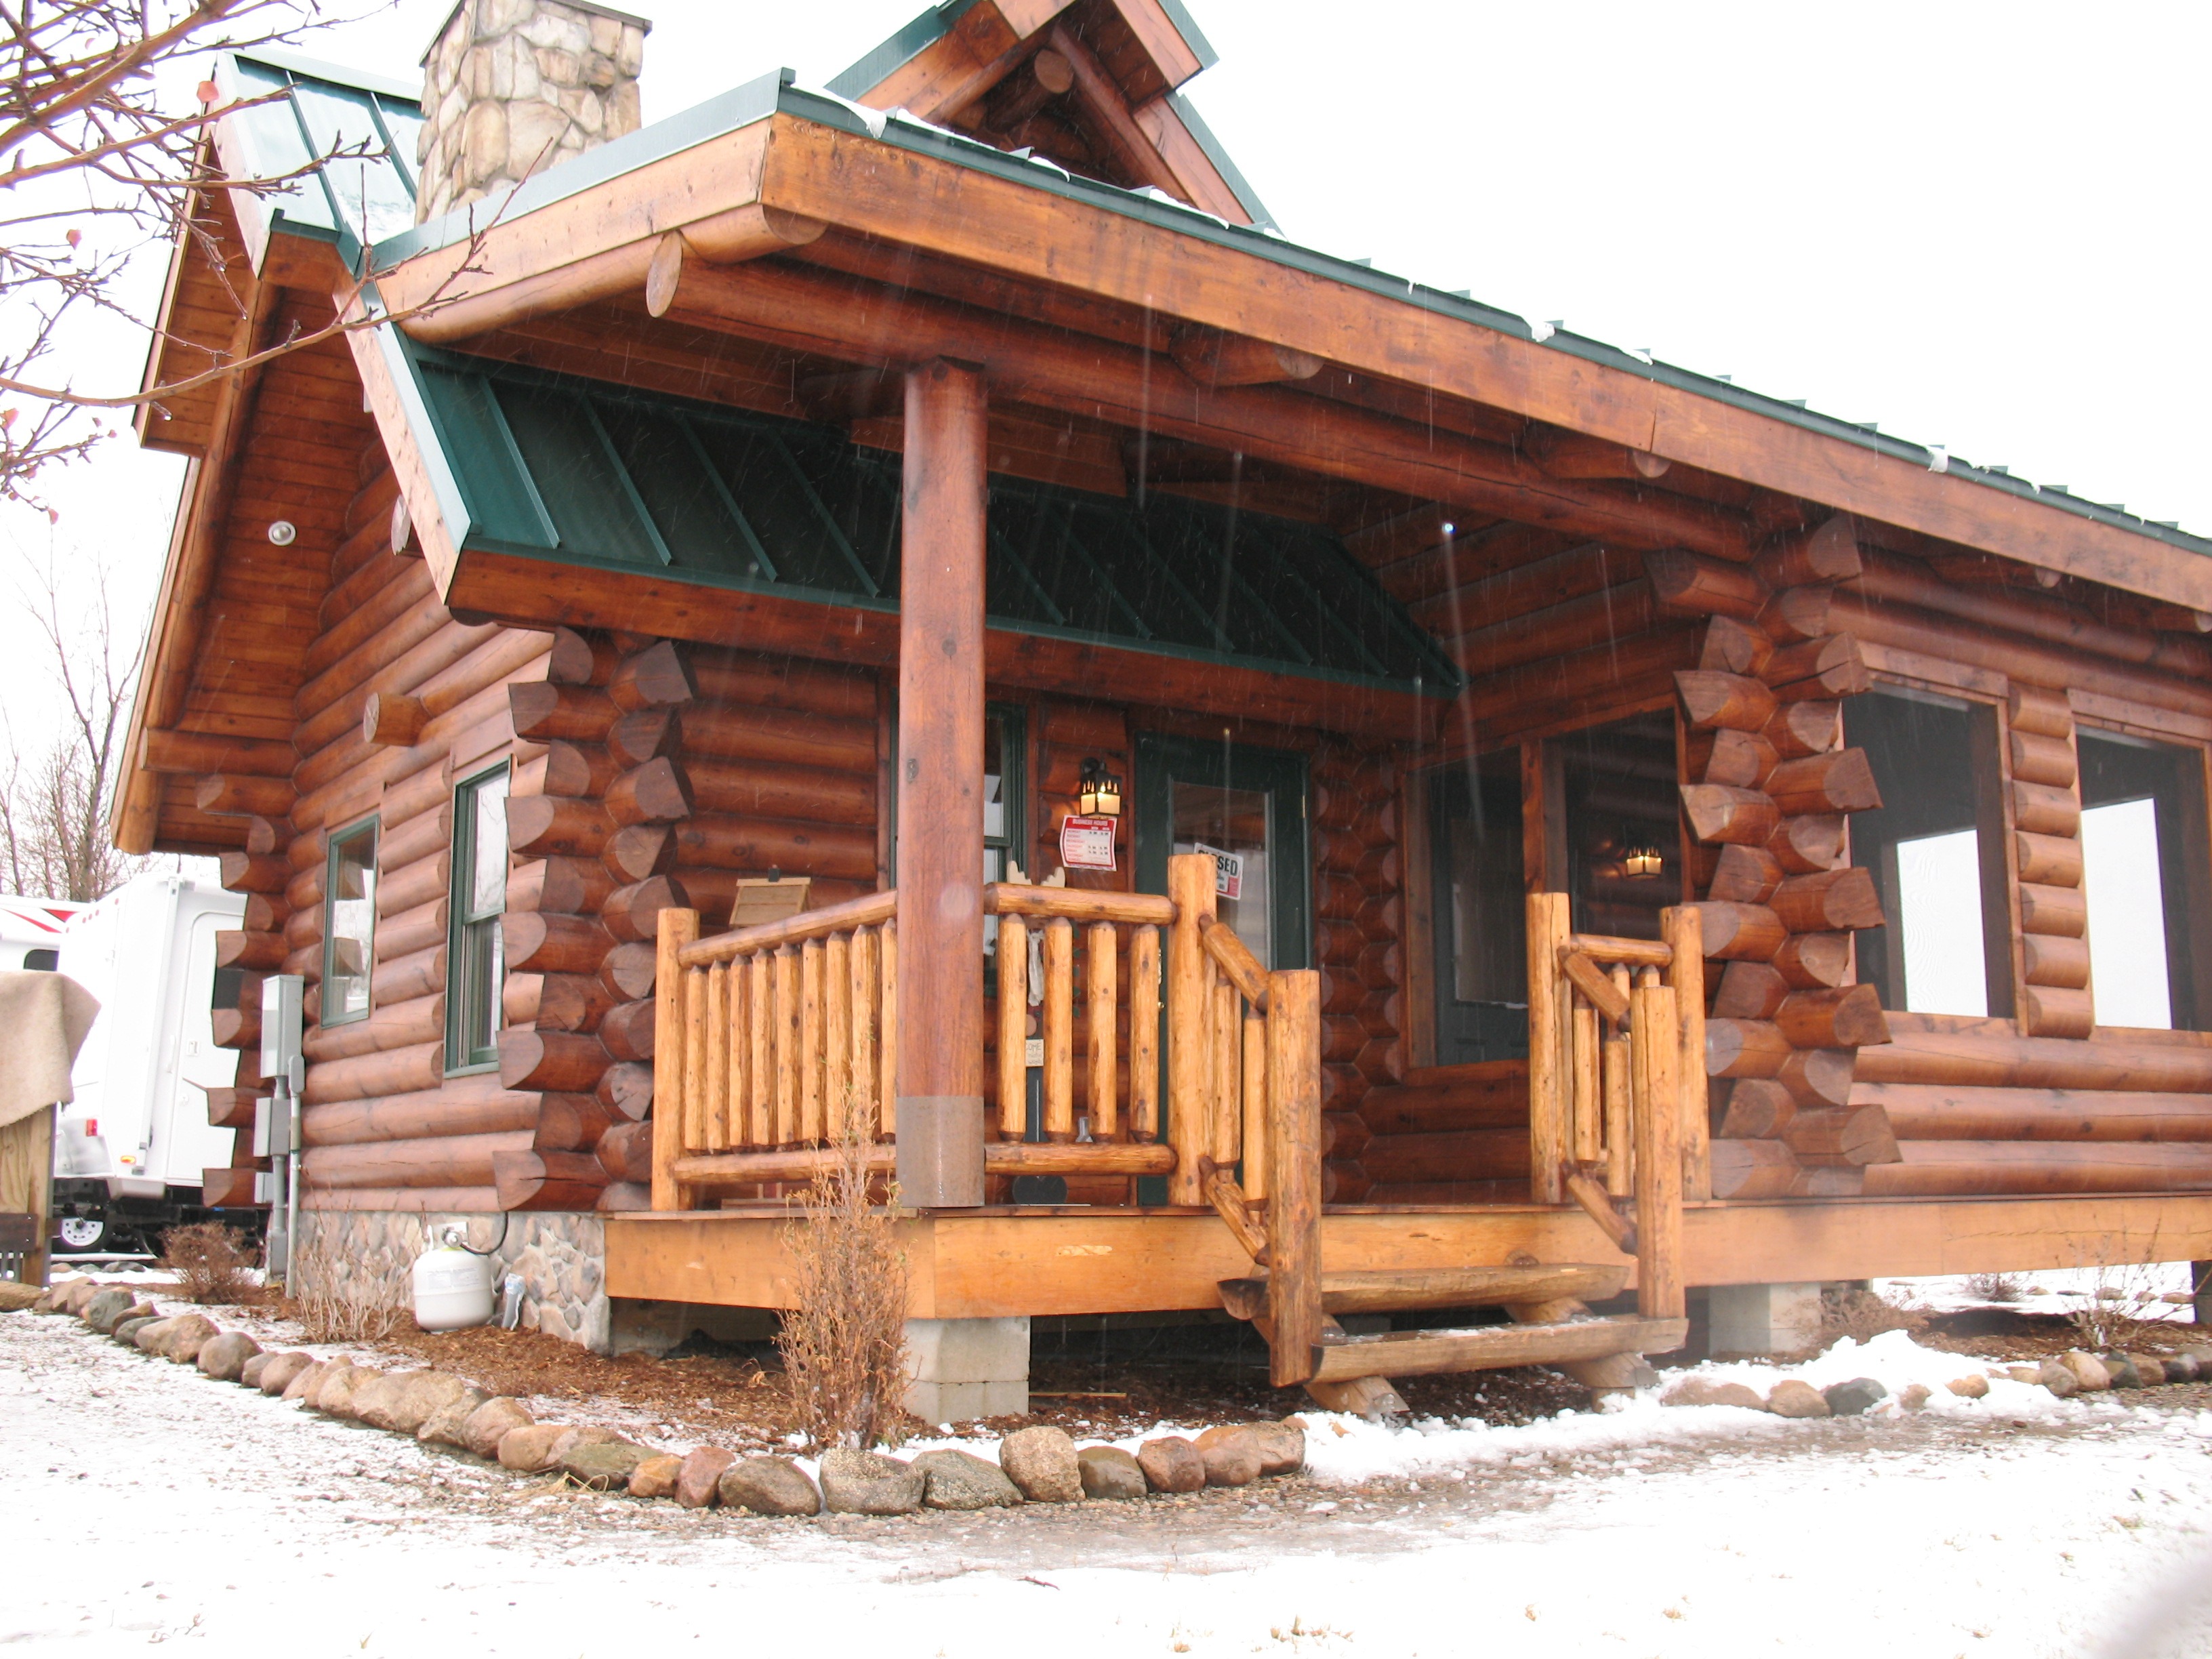 Rustic log cabin in Minnesota